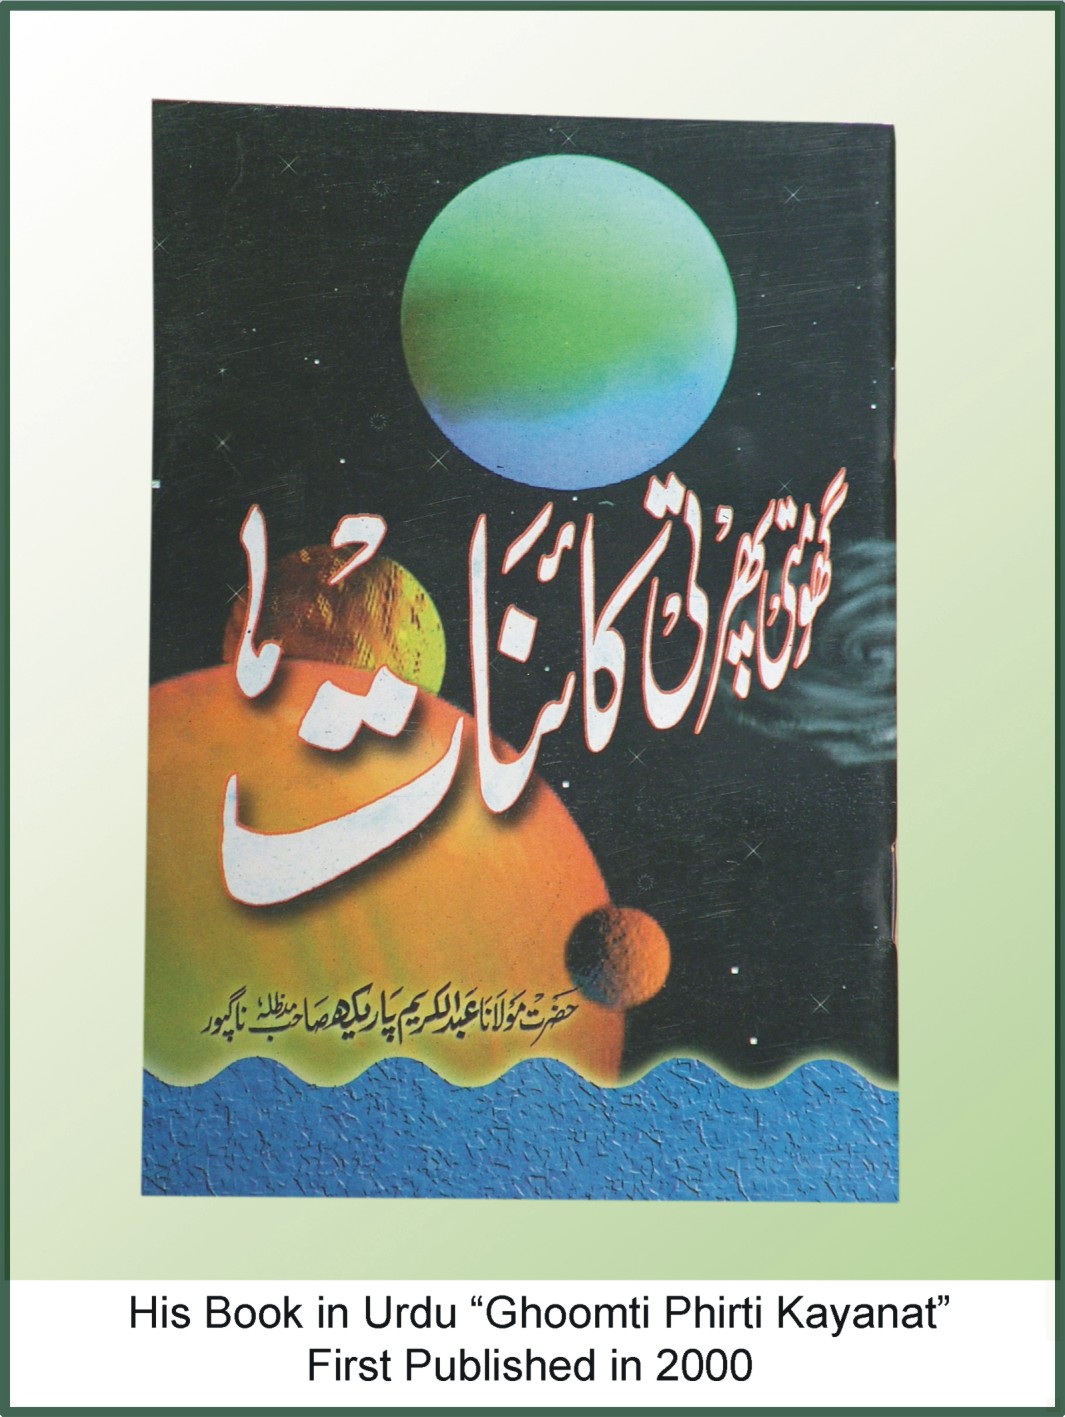 Ghoomti Phirti Kayanat (Urdu) First Published in 2000